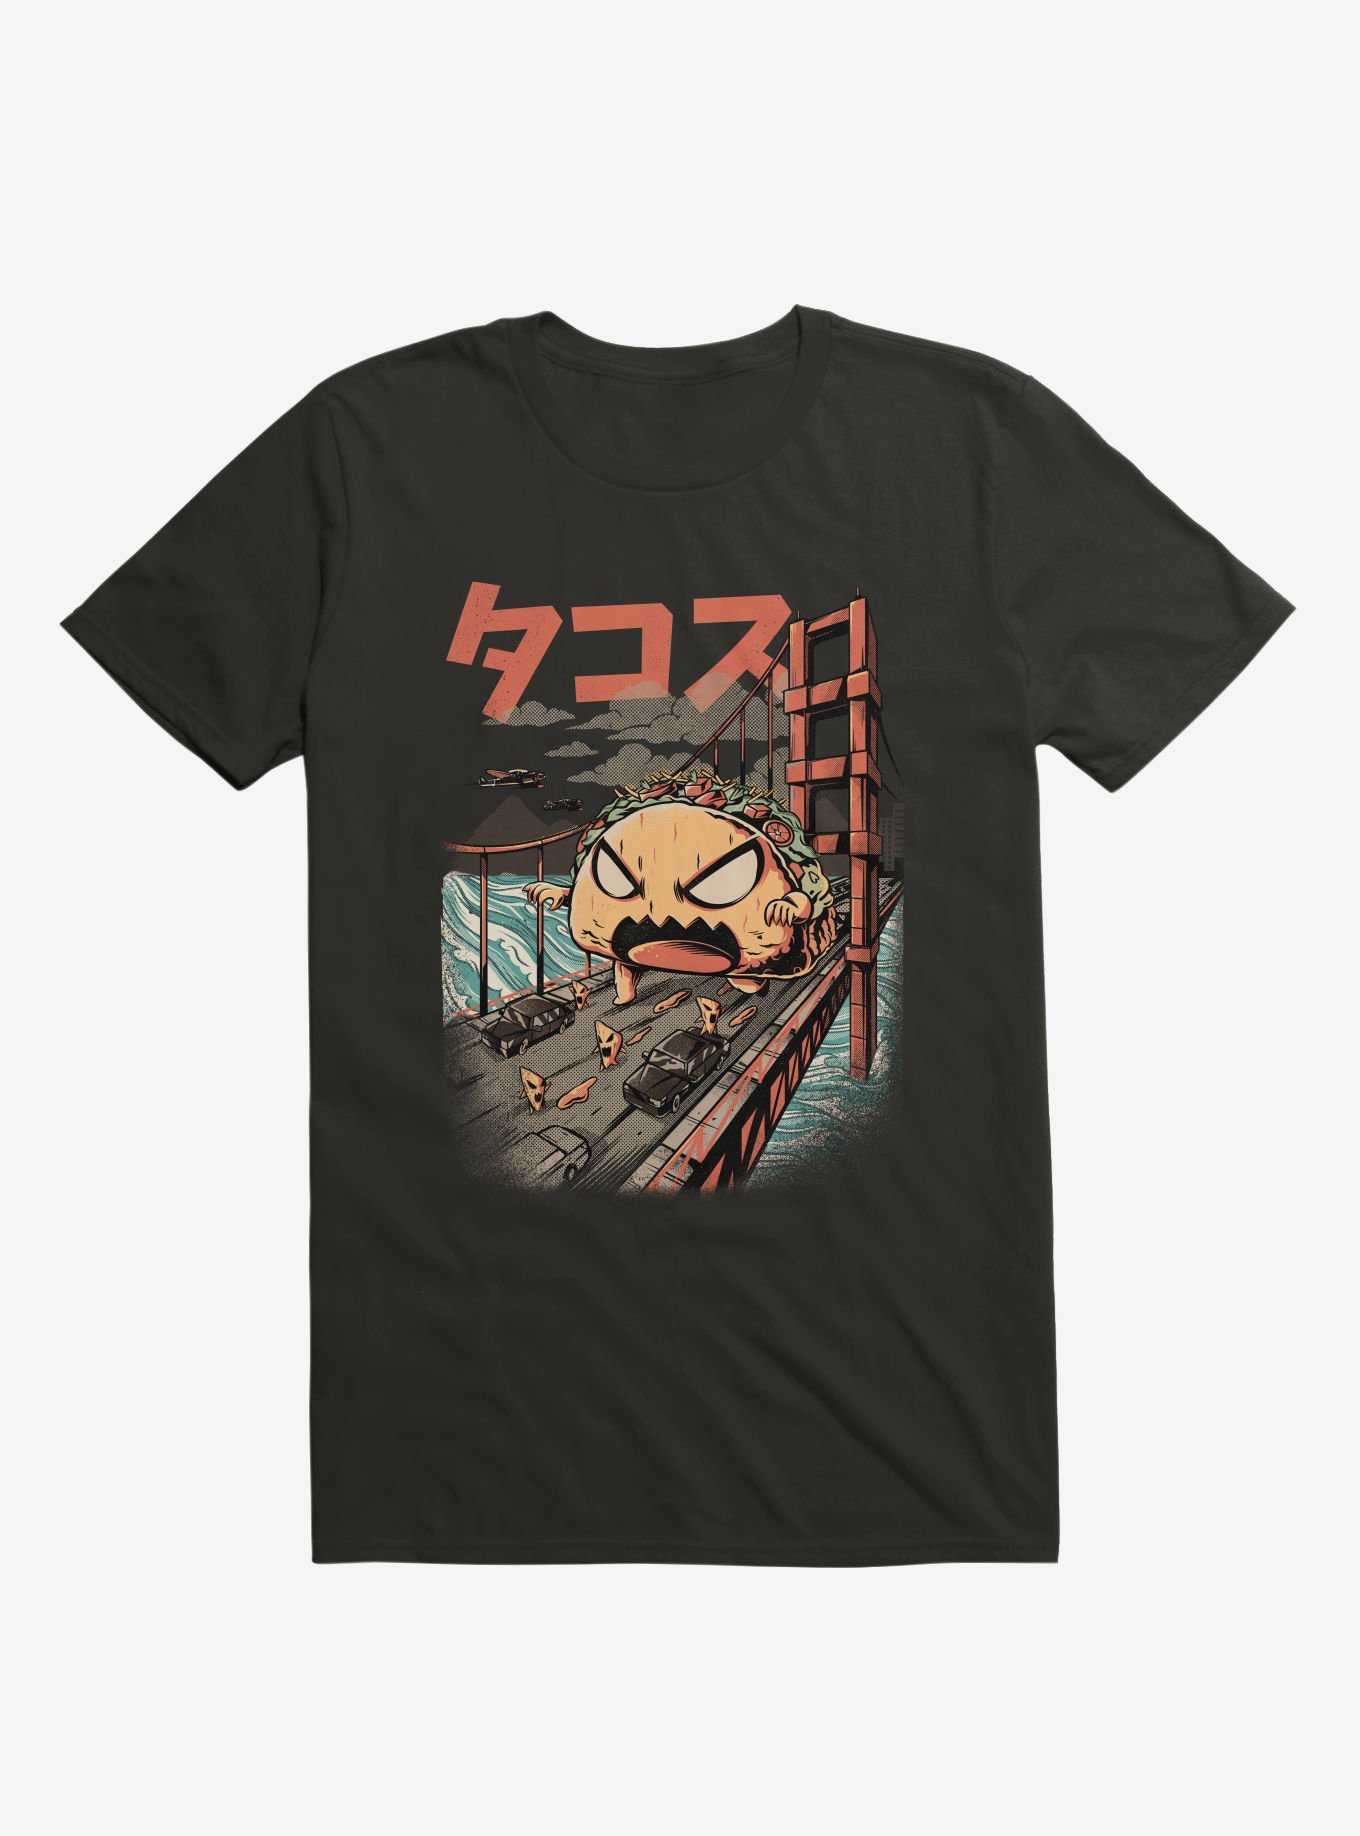 The Black Takaiju Attack Black T-Shirt, , hi-res